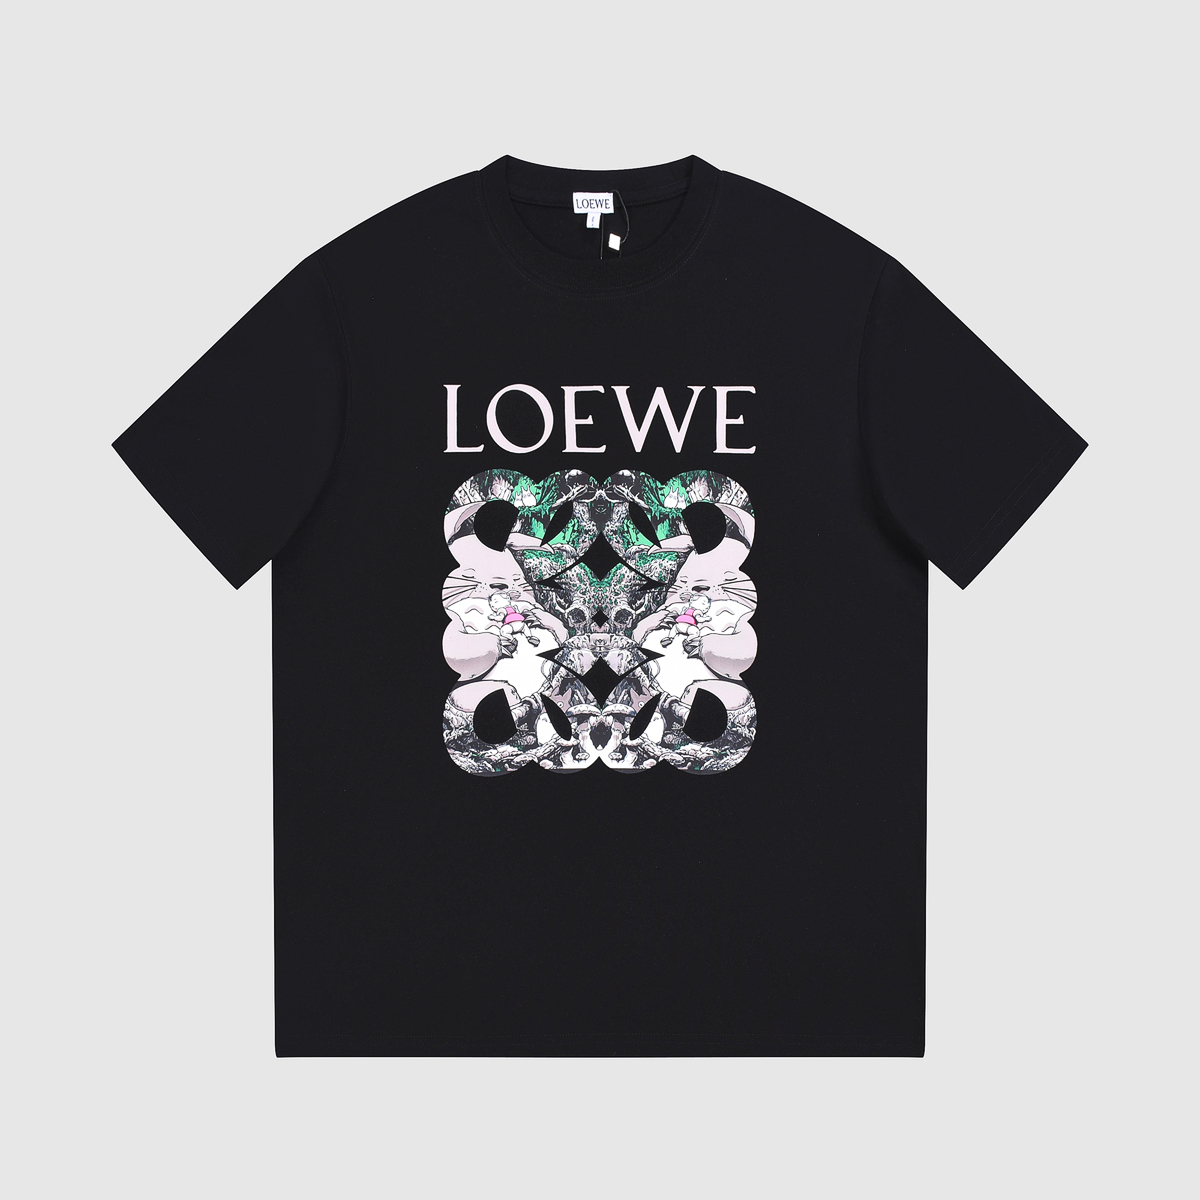 Loewe Summer Cute Rabbit Printed Round Collar Unisex Fashion T-shirt